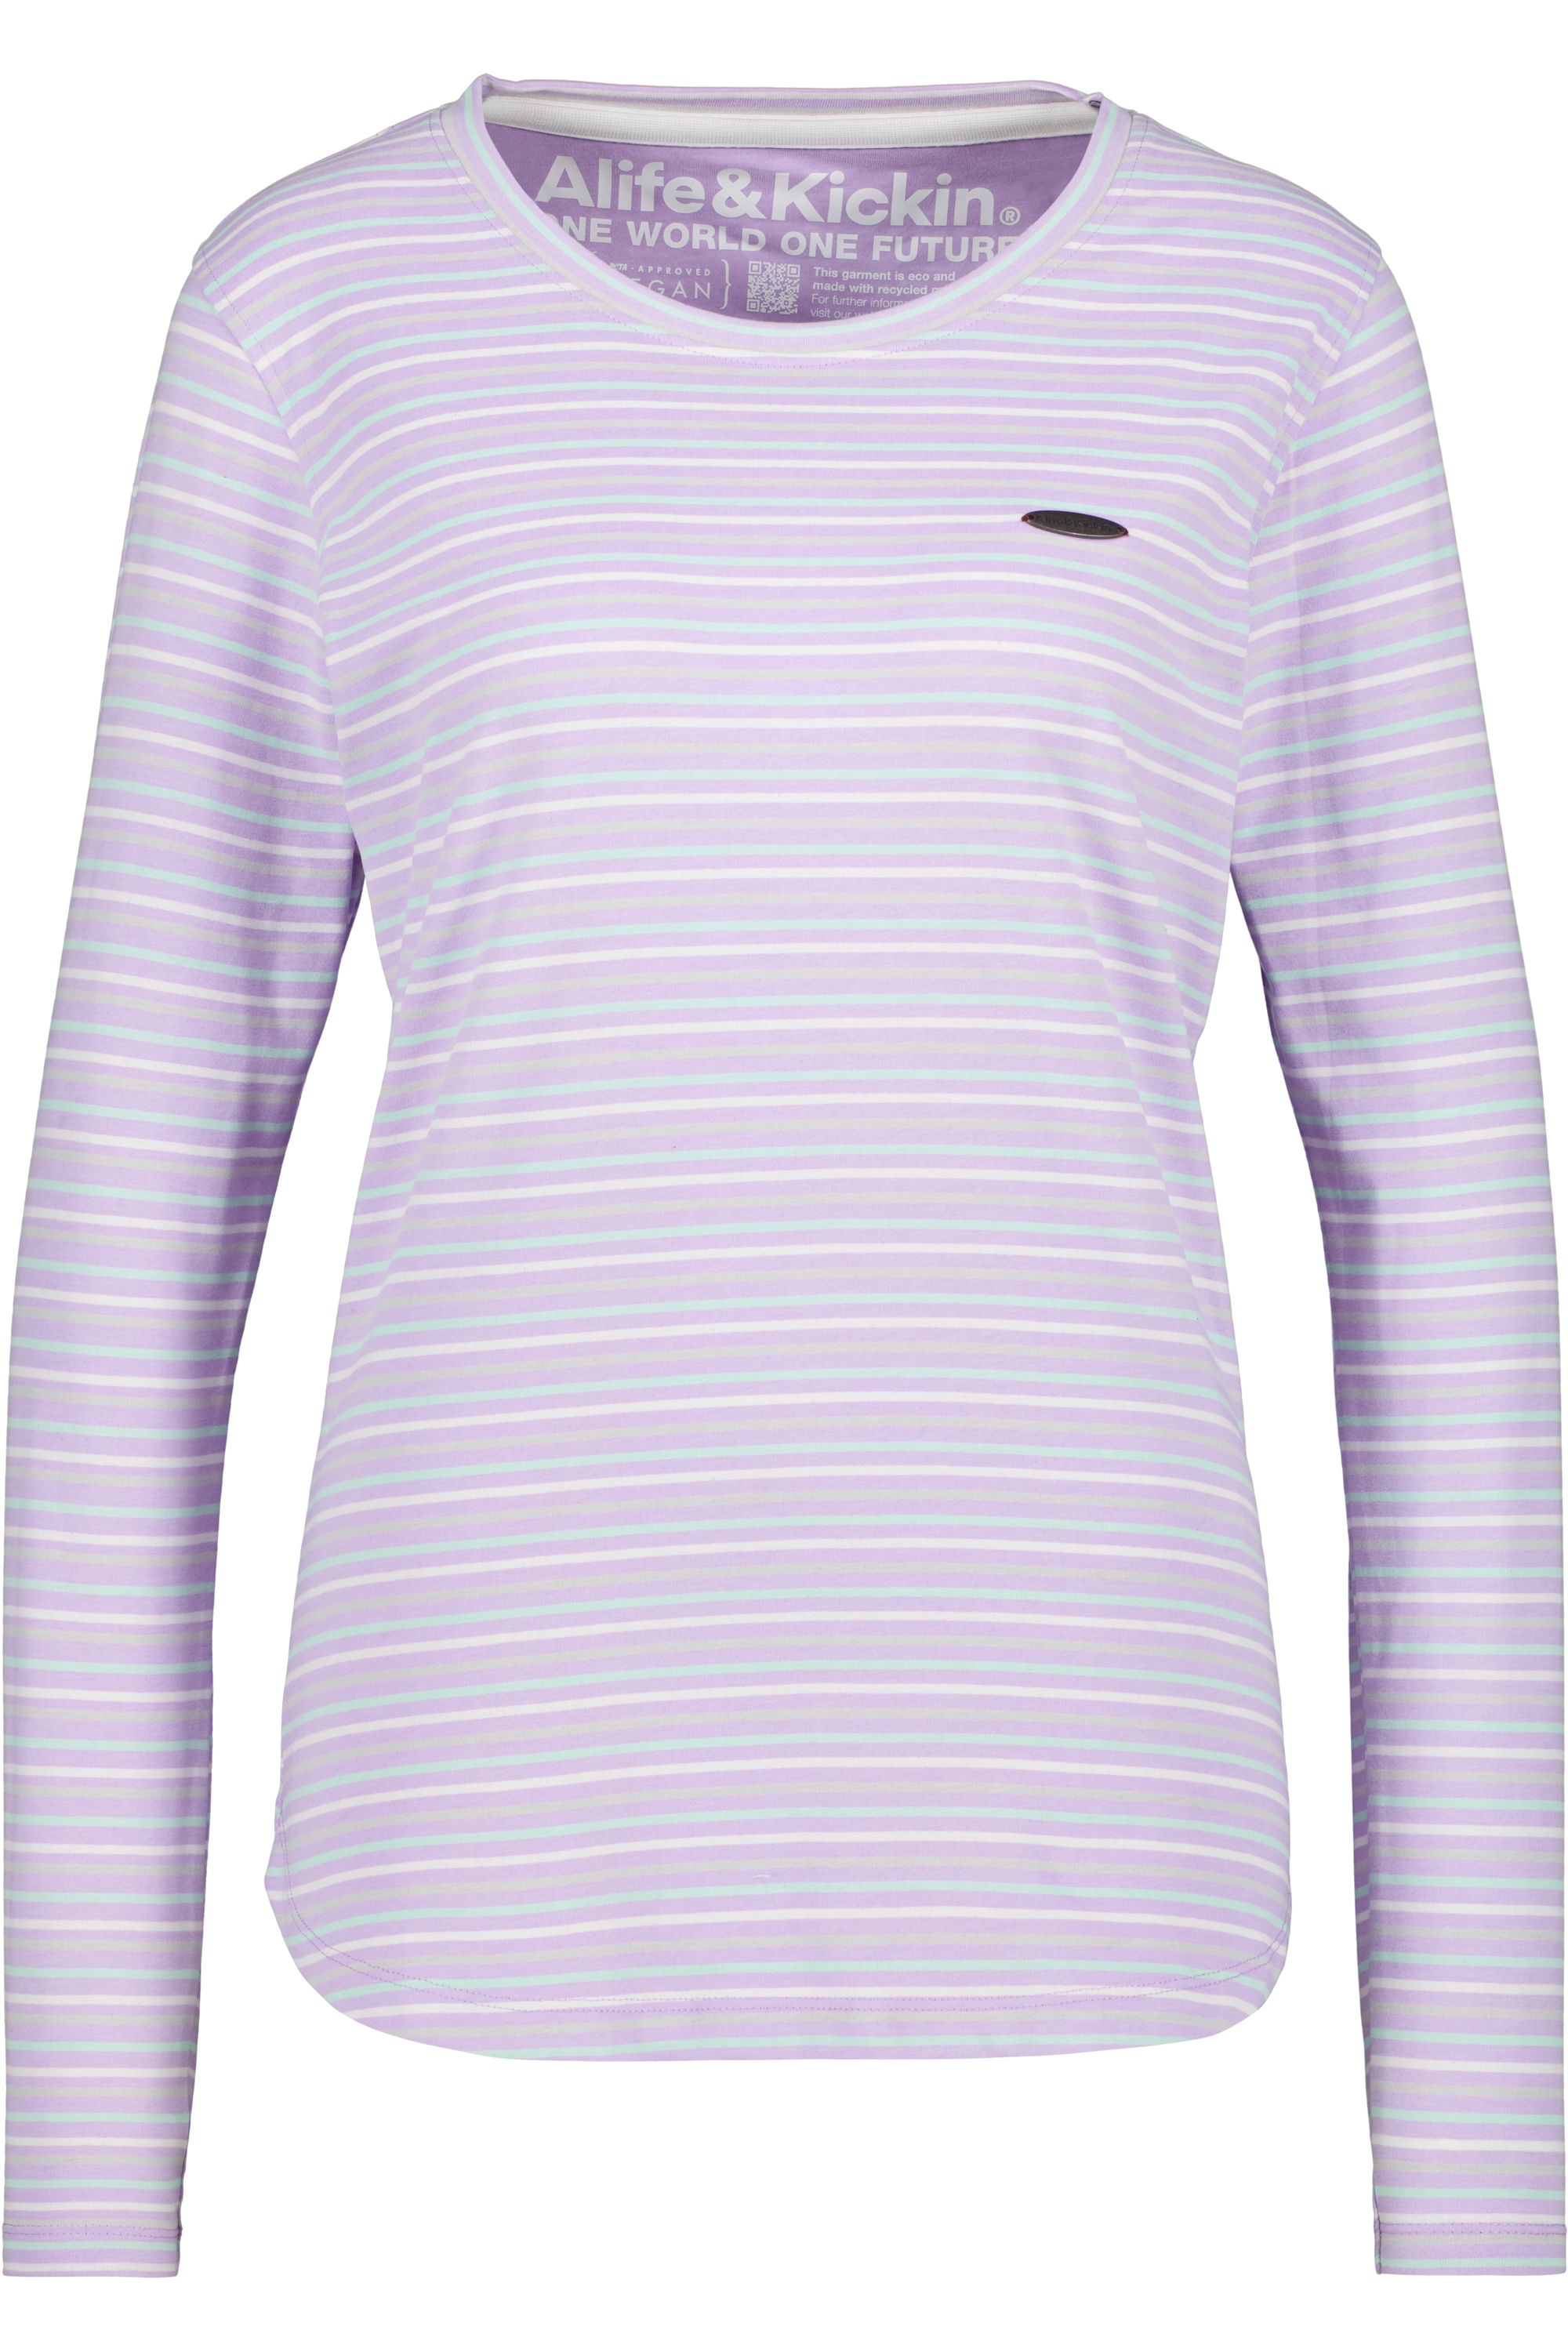 Лонгслив alife and kickin, Langarmshirt, Shirt LeaAK Z, цвет digital lavender